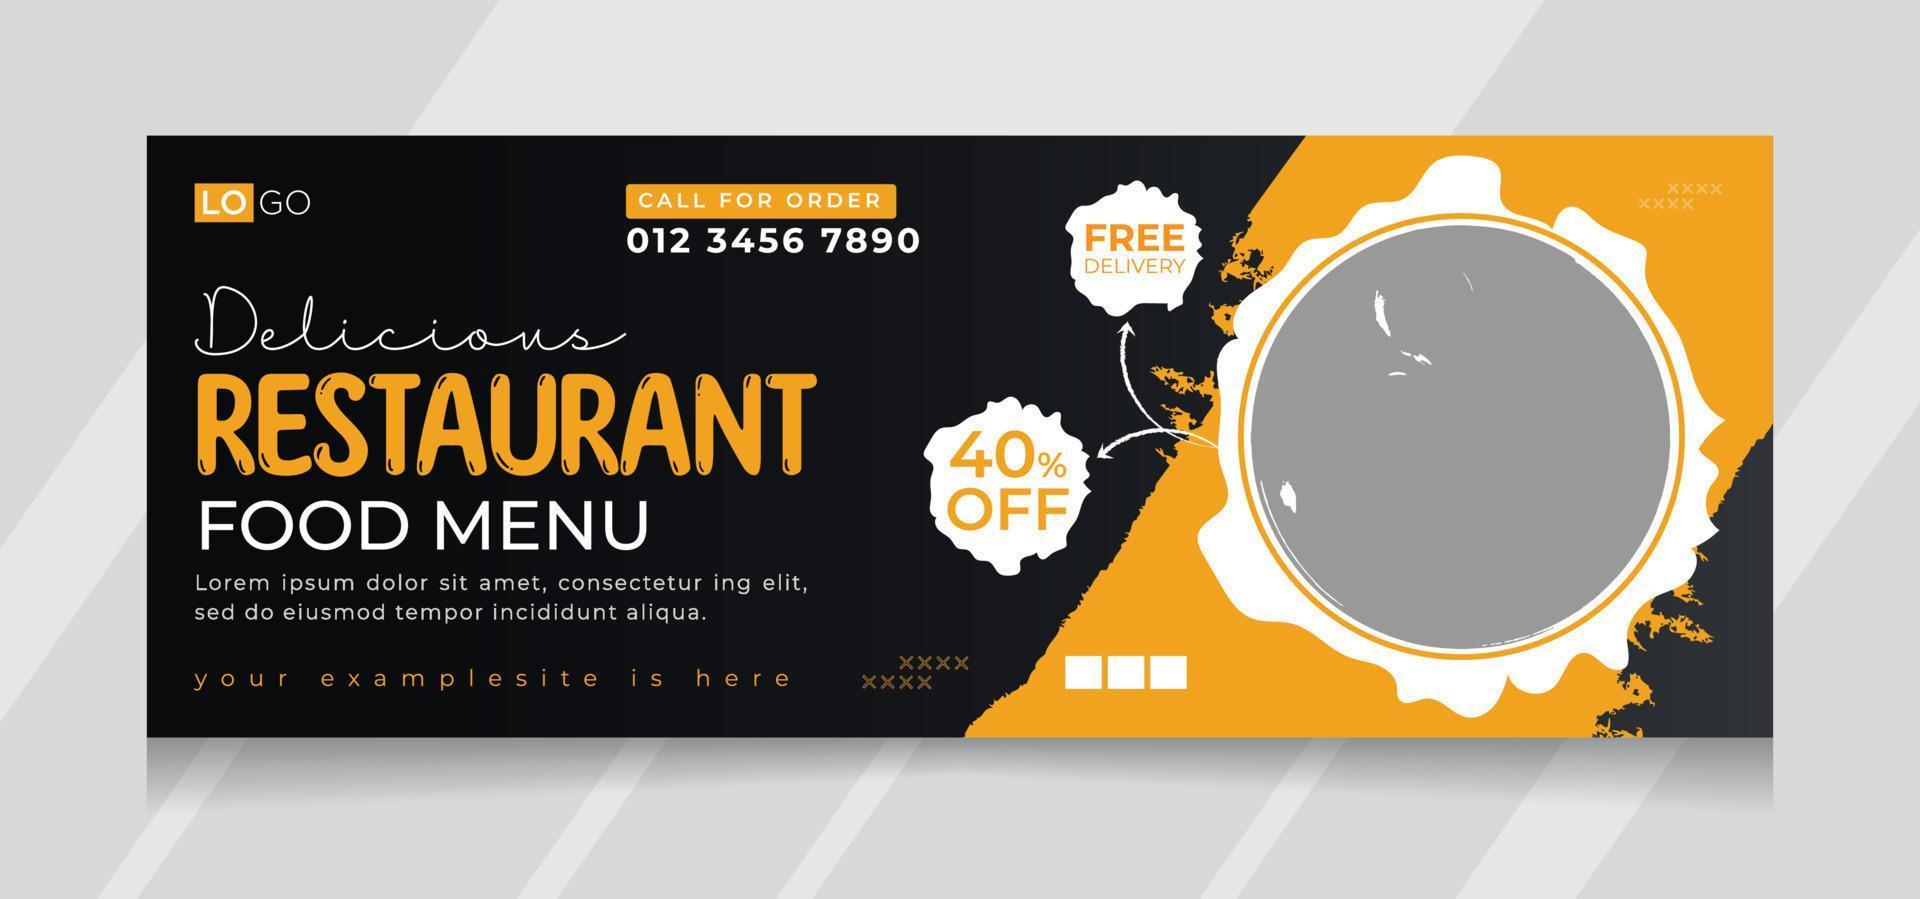 Restaurant food menu social media cover banner vector